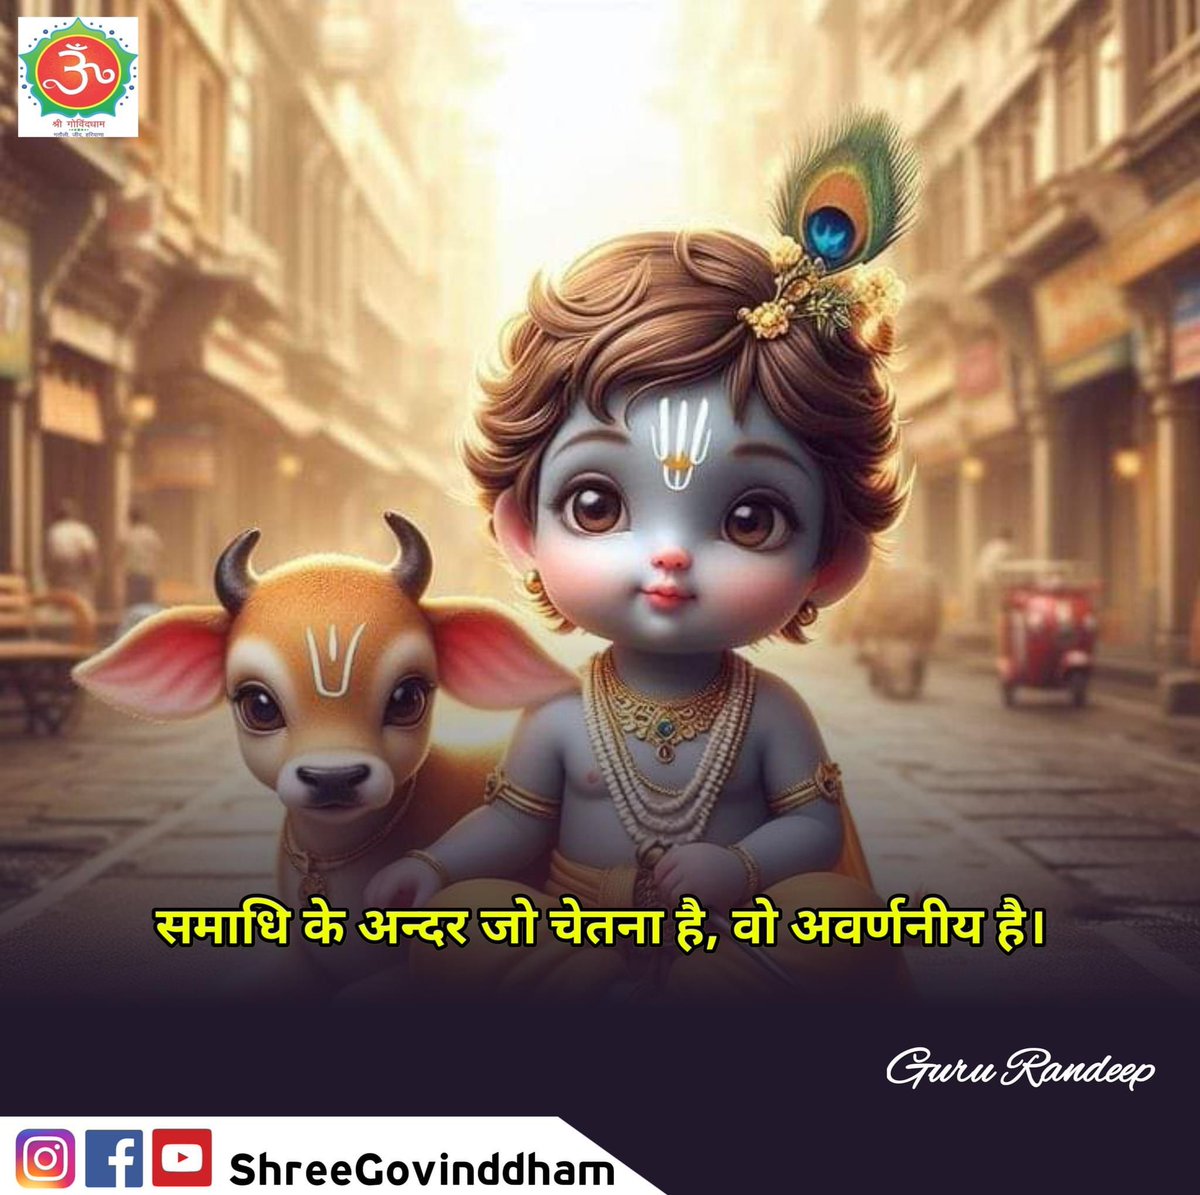 #Guru_Randeep_Ji #Shree_Govind_Dham #Daily_Quote #Motivational_Quotes #Spiritual #Spirituality #Spiritual_quotes #ShriKrishna #ShriRam #BhagavadGita #Guru_dev #guru #govinddham #sant #श्री_कृष्ण #shree_govind_dham_english